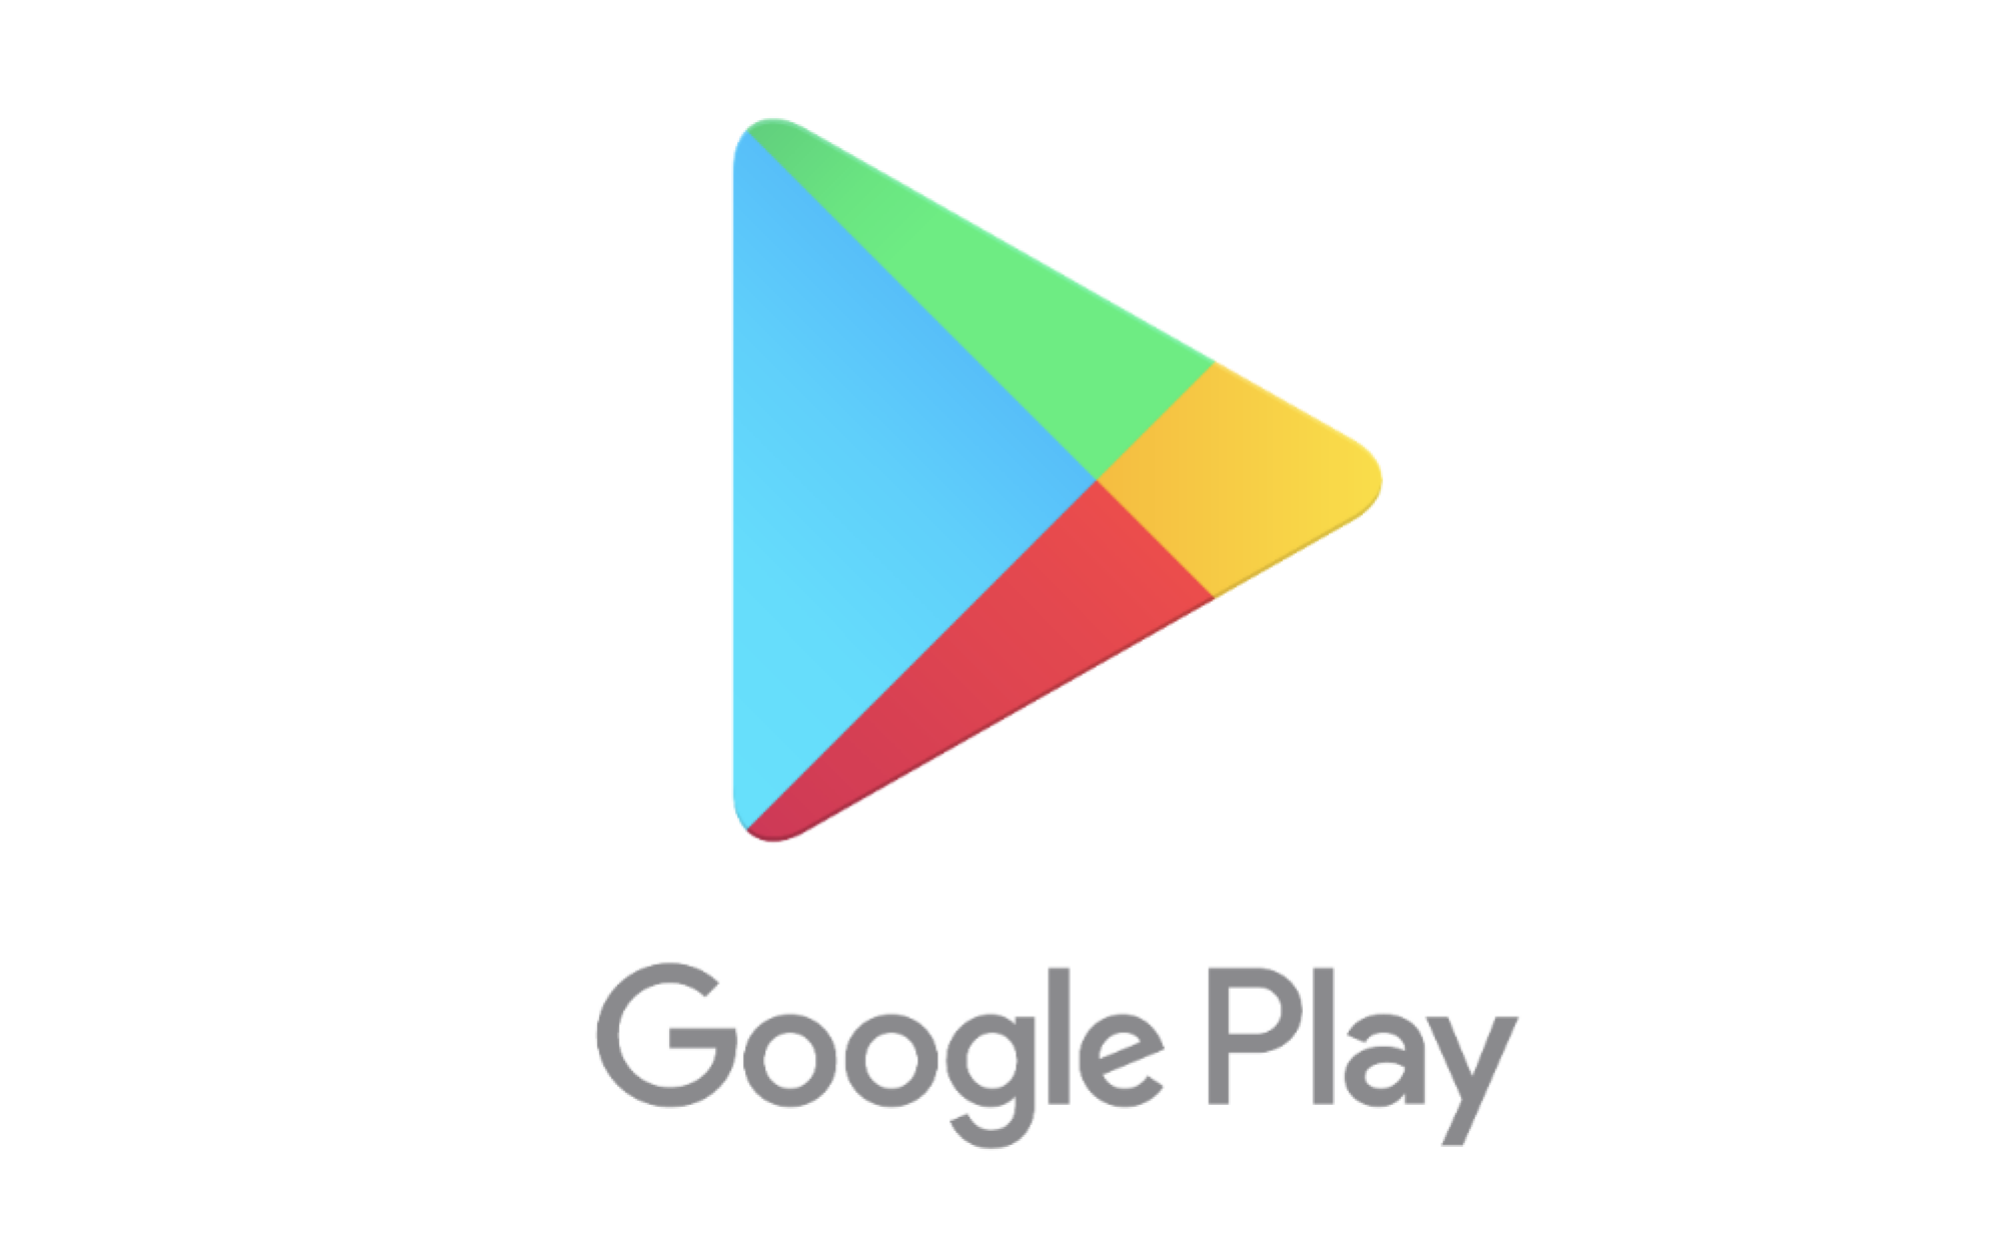 Google Play old logo